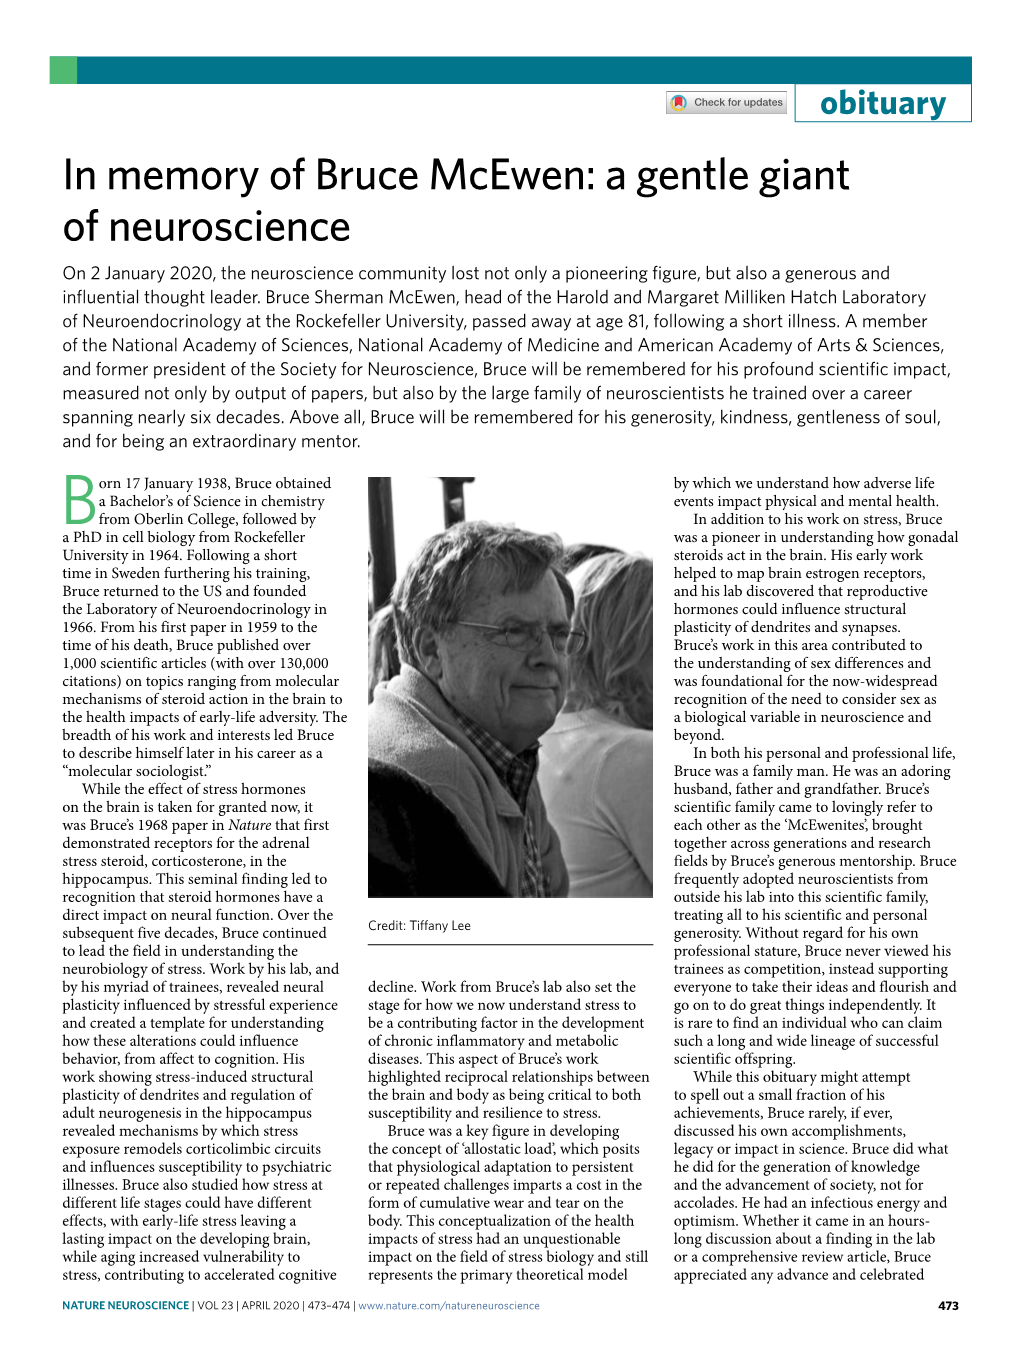 In Memory of Bruce Mcewen: a Gentle Giant of Neuroscience